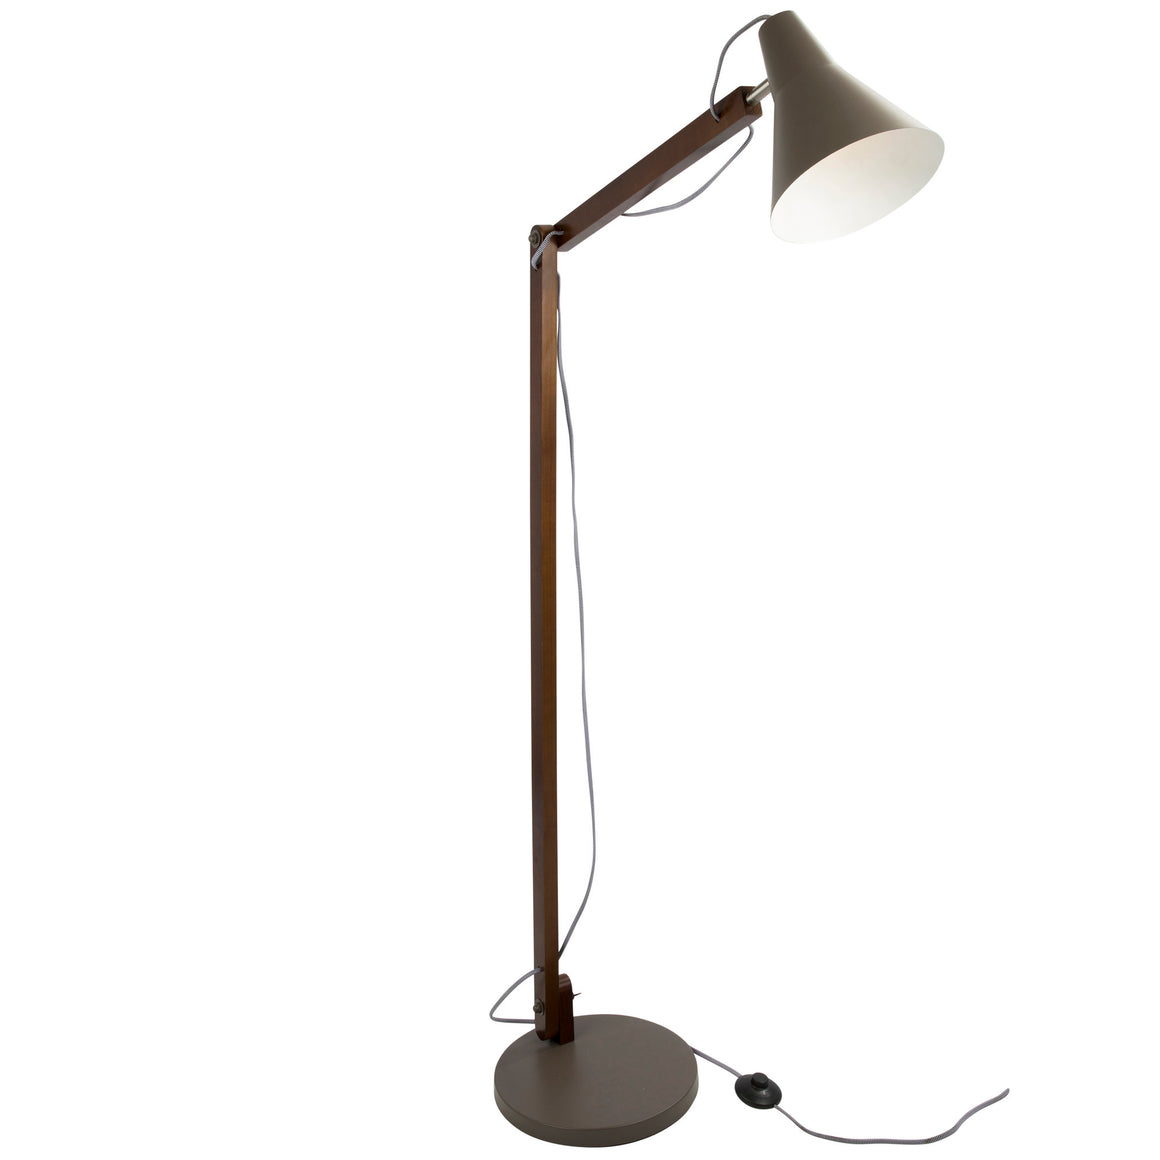 Oregon Industrial Adjustable Floor Lamp in Walnut and Grey by LumiSource